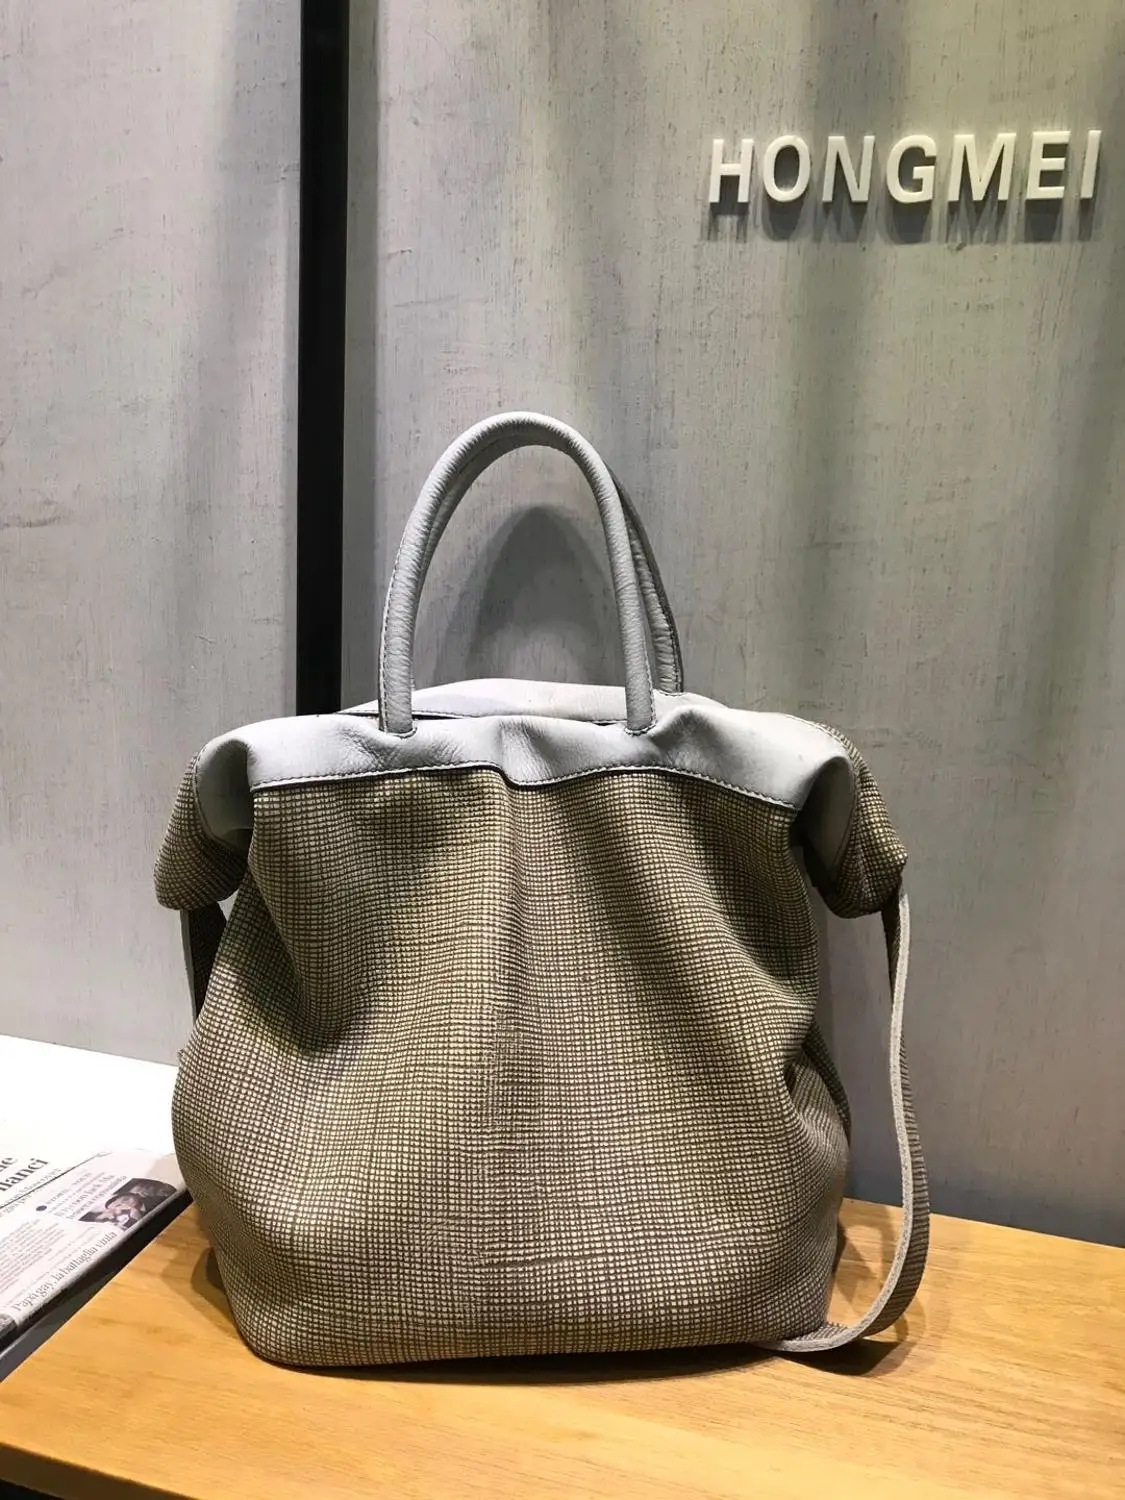 Купи Vendange women's bag simple fashion casual lady shoulder bag handmade leather bag totes 2641 за 5,933 рублей в магазине AliExpress